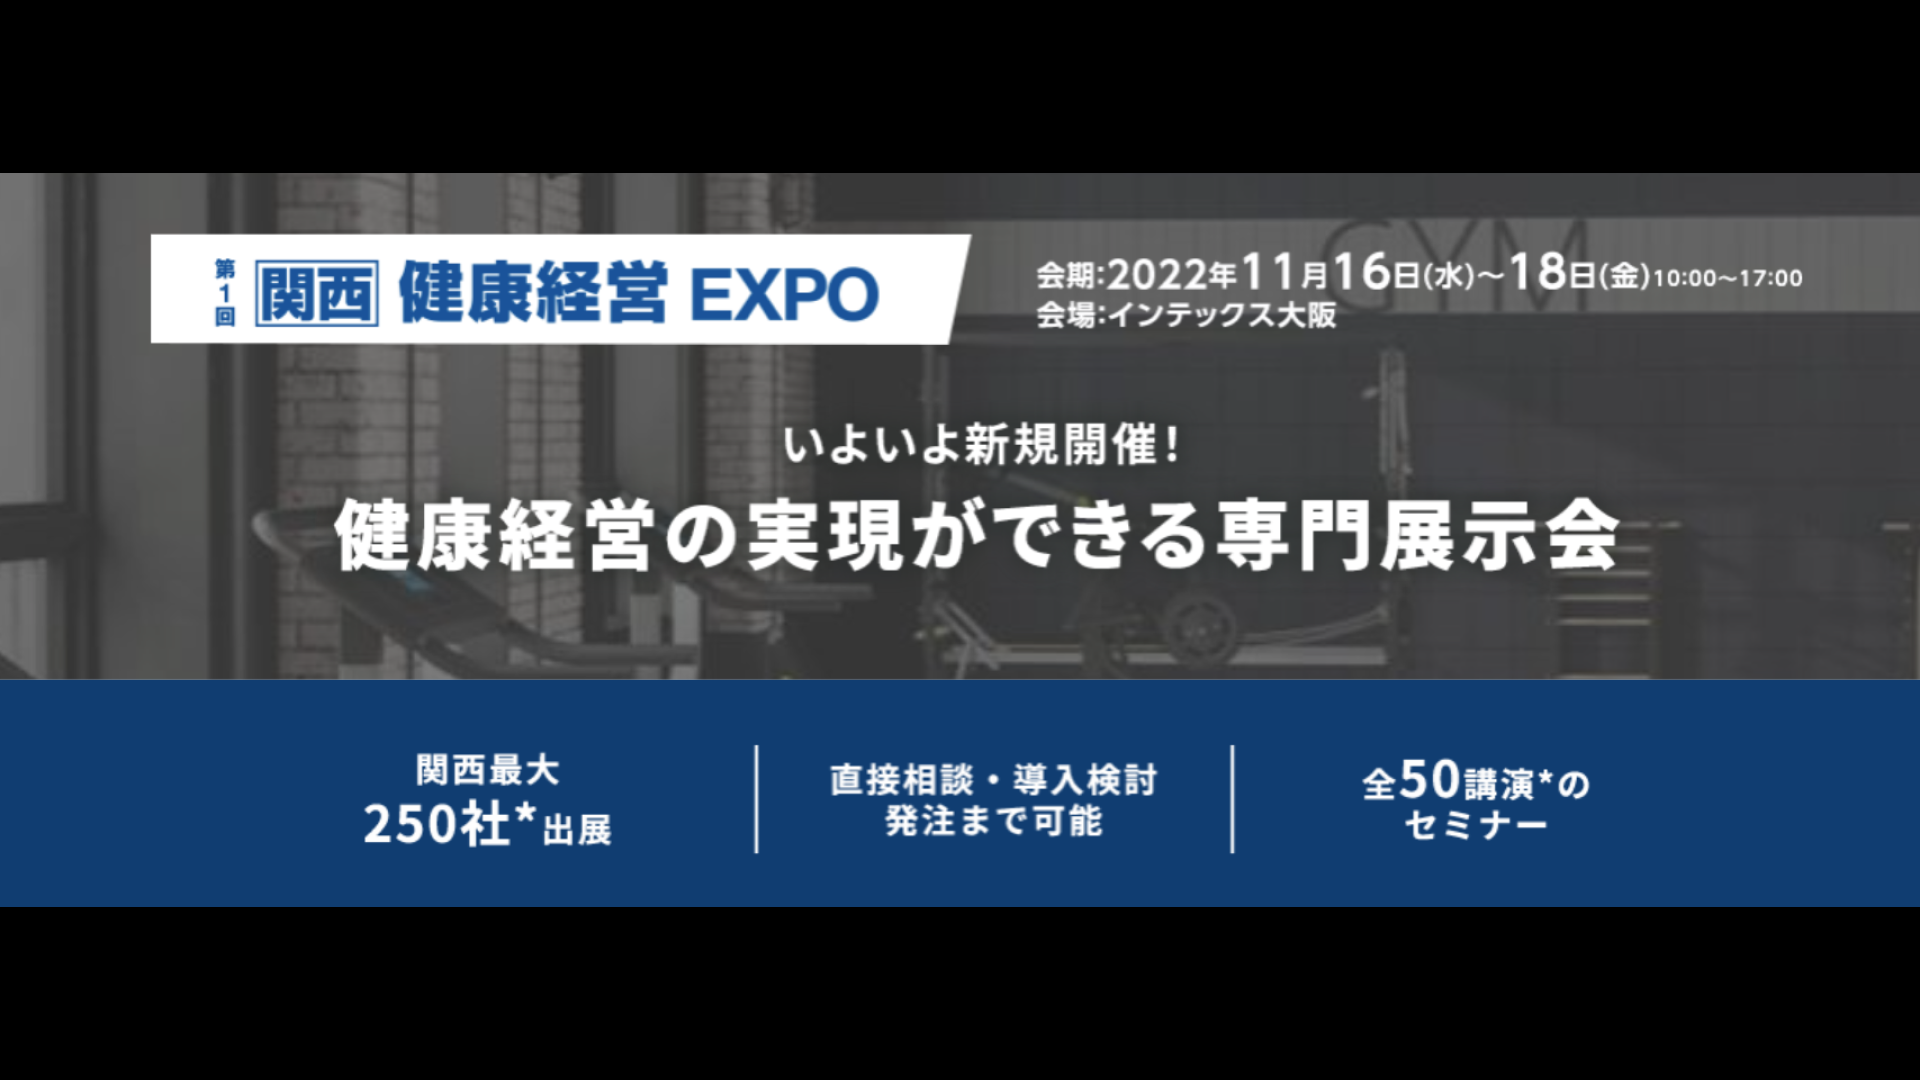 【WELSA】インテックス大阪にて開催される『健康経営 EXPO』へ出展決定！！